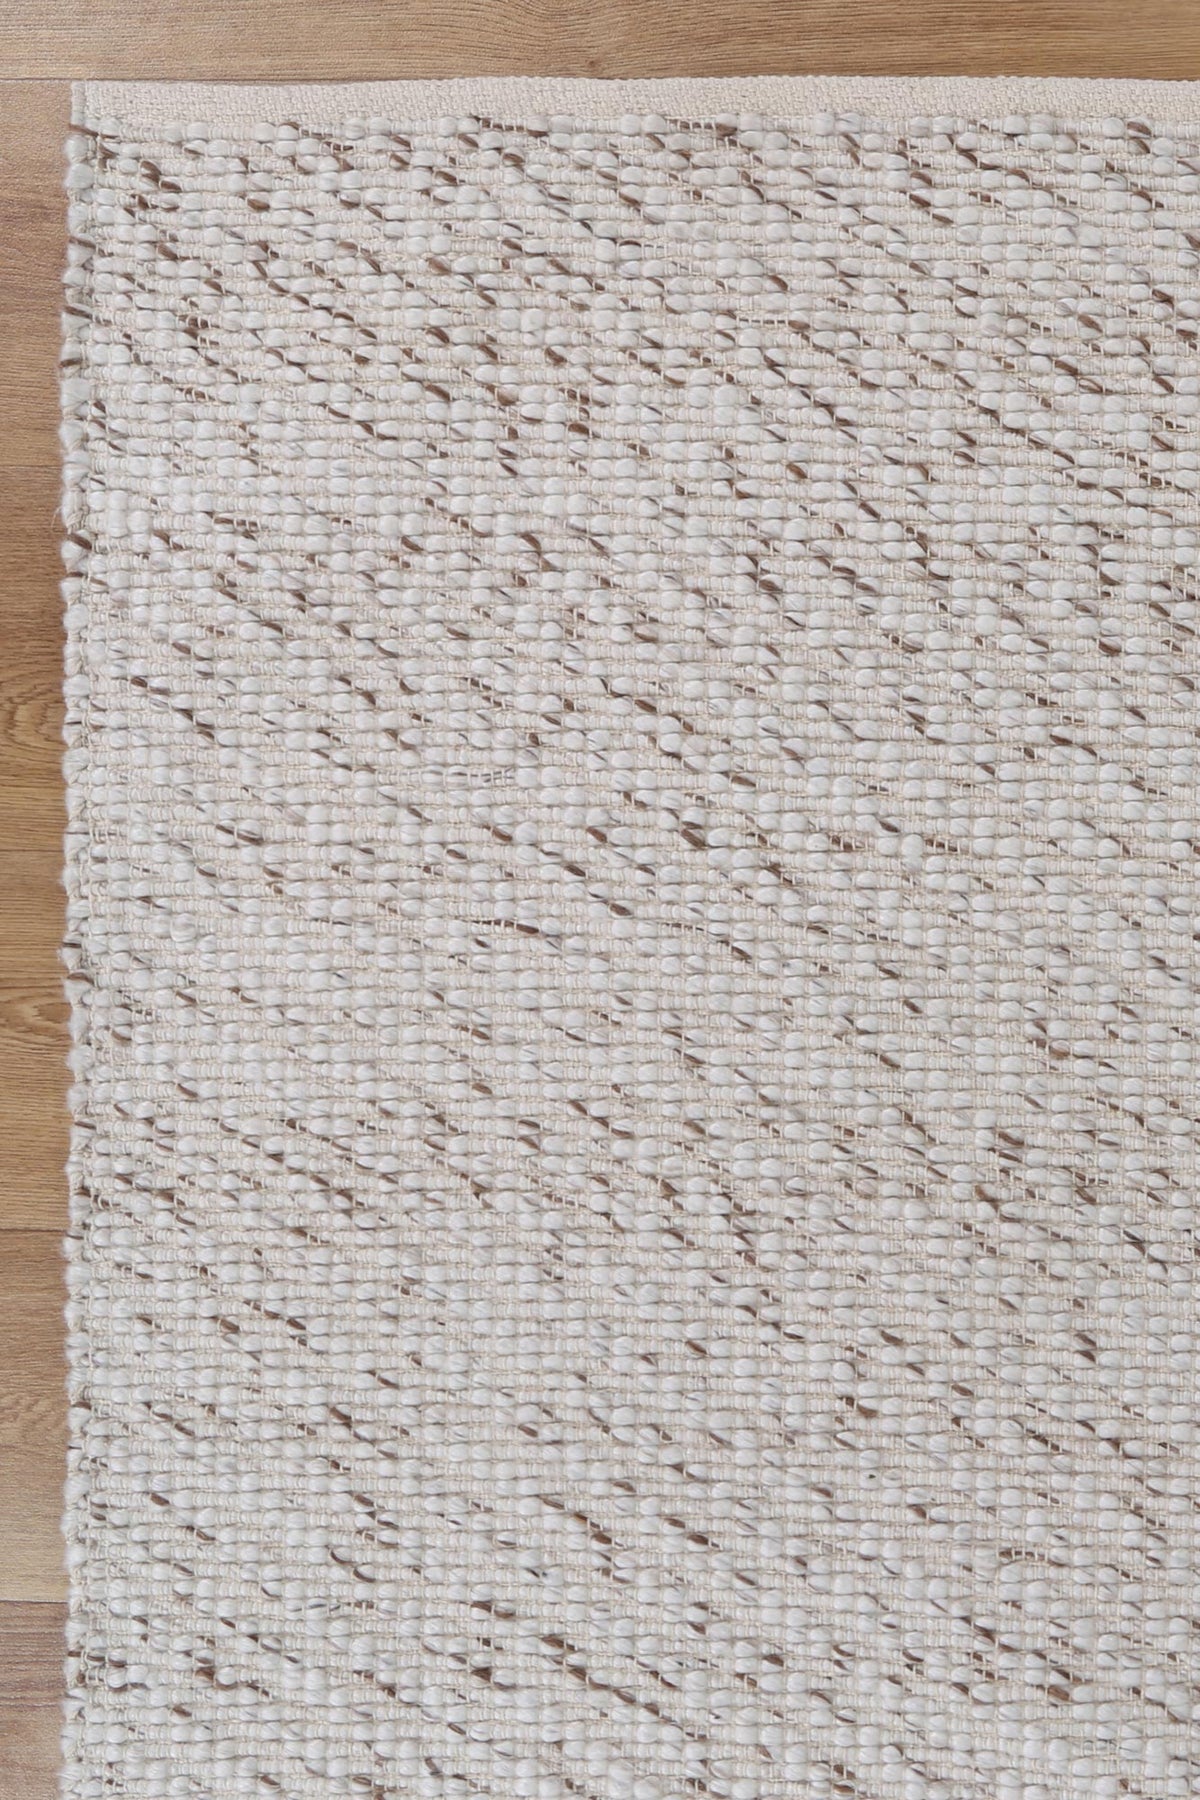 Basalt Beige Wool Blend Textured Rug